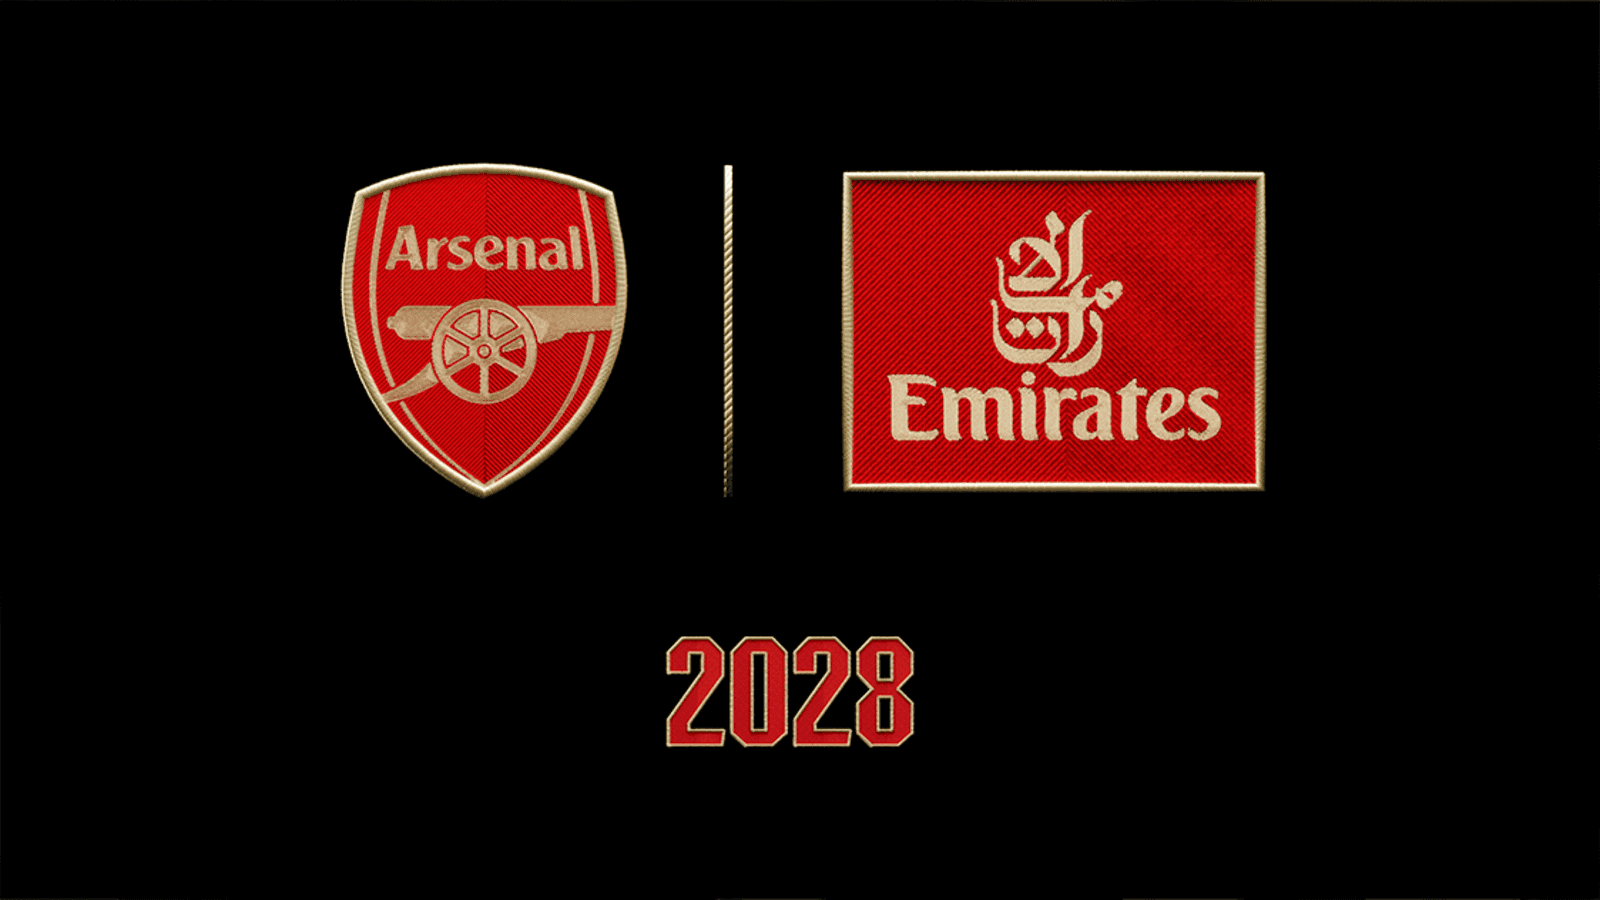 Arsenal and Emirates extend partnership to 2028 | Partner Activation | News  | Arsenal.com